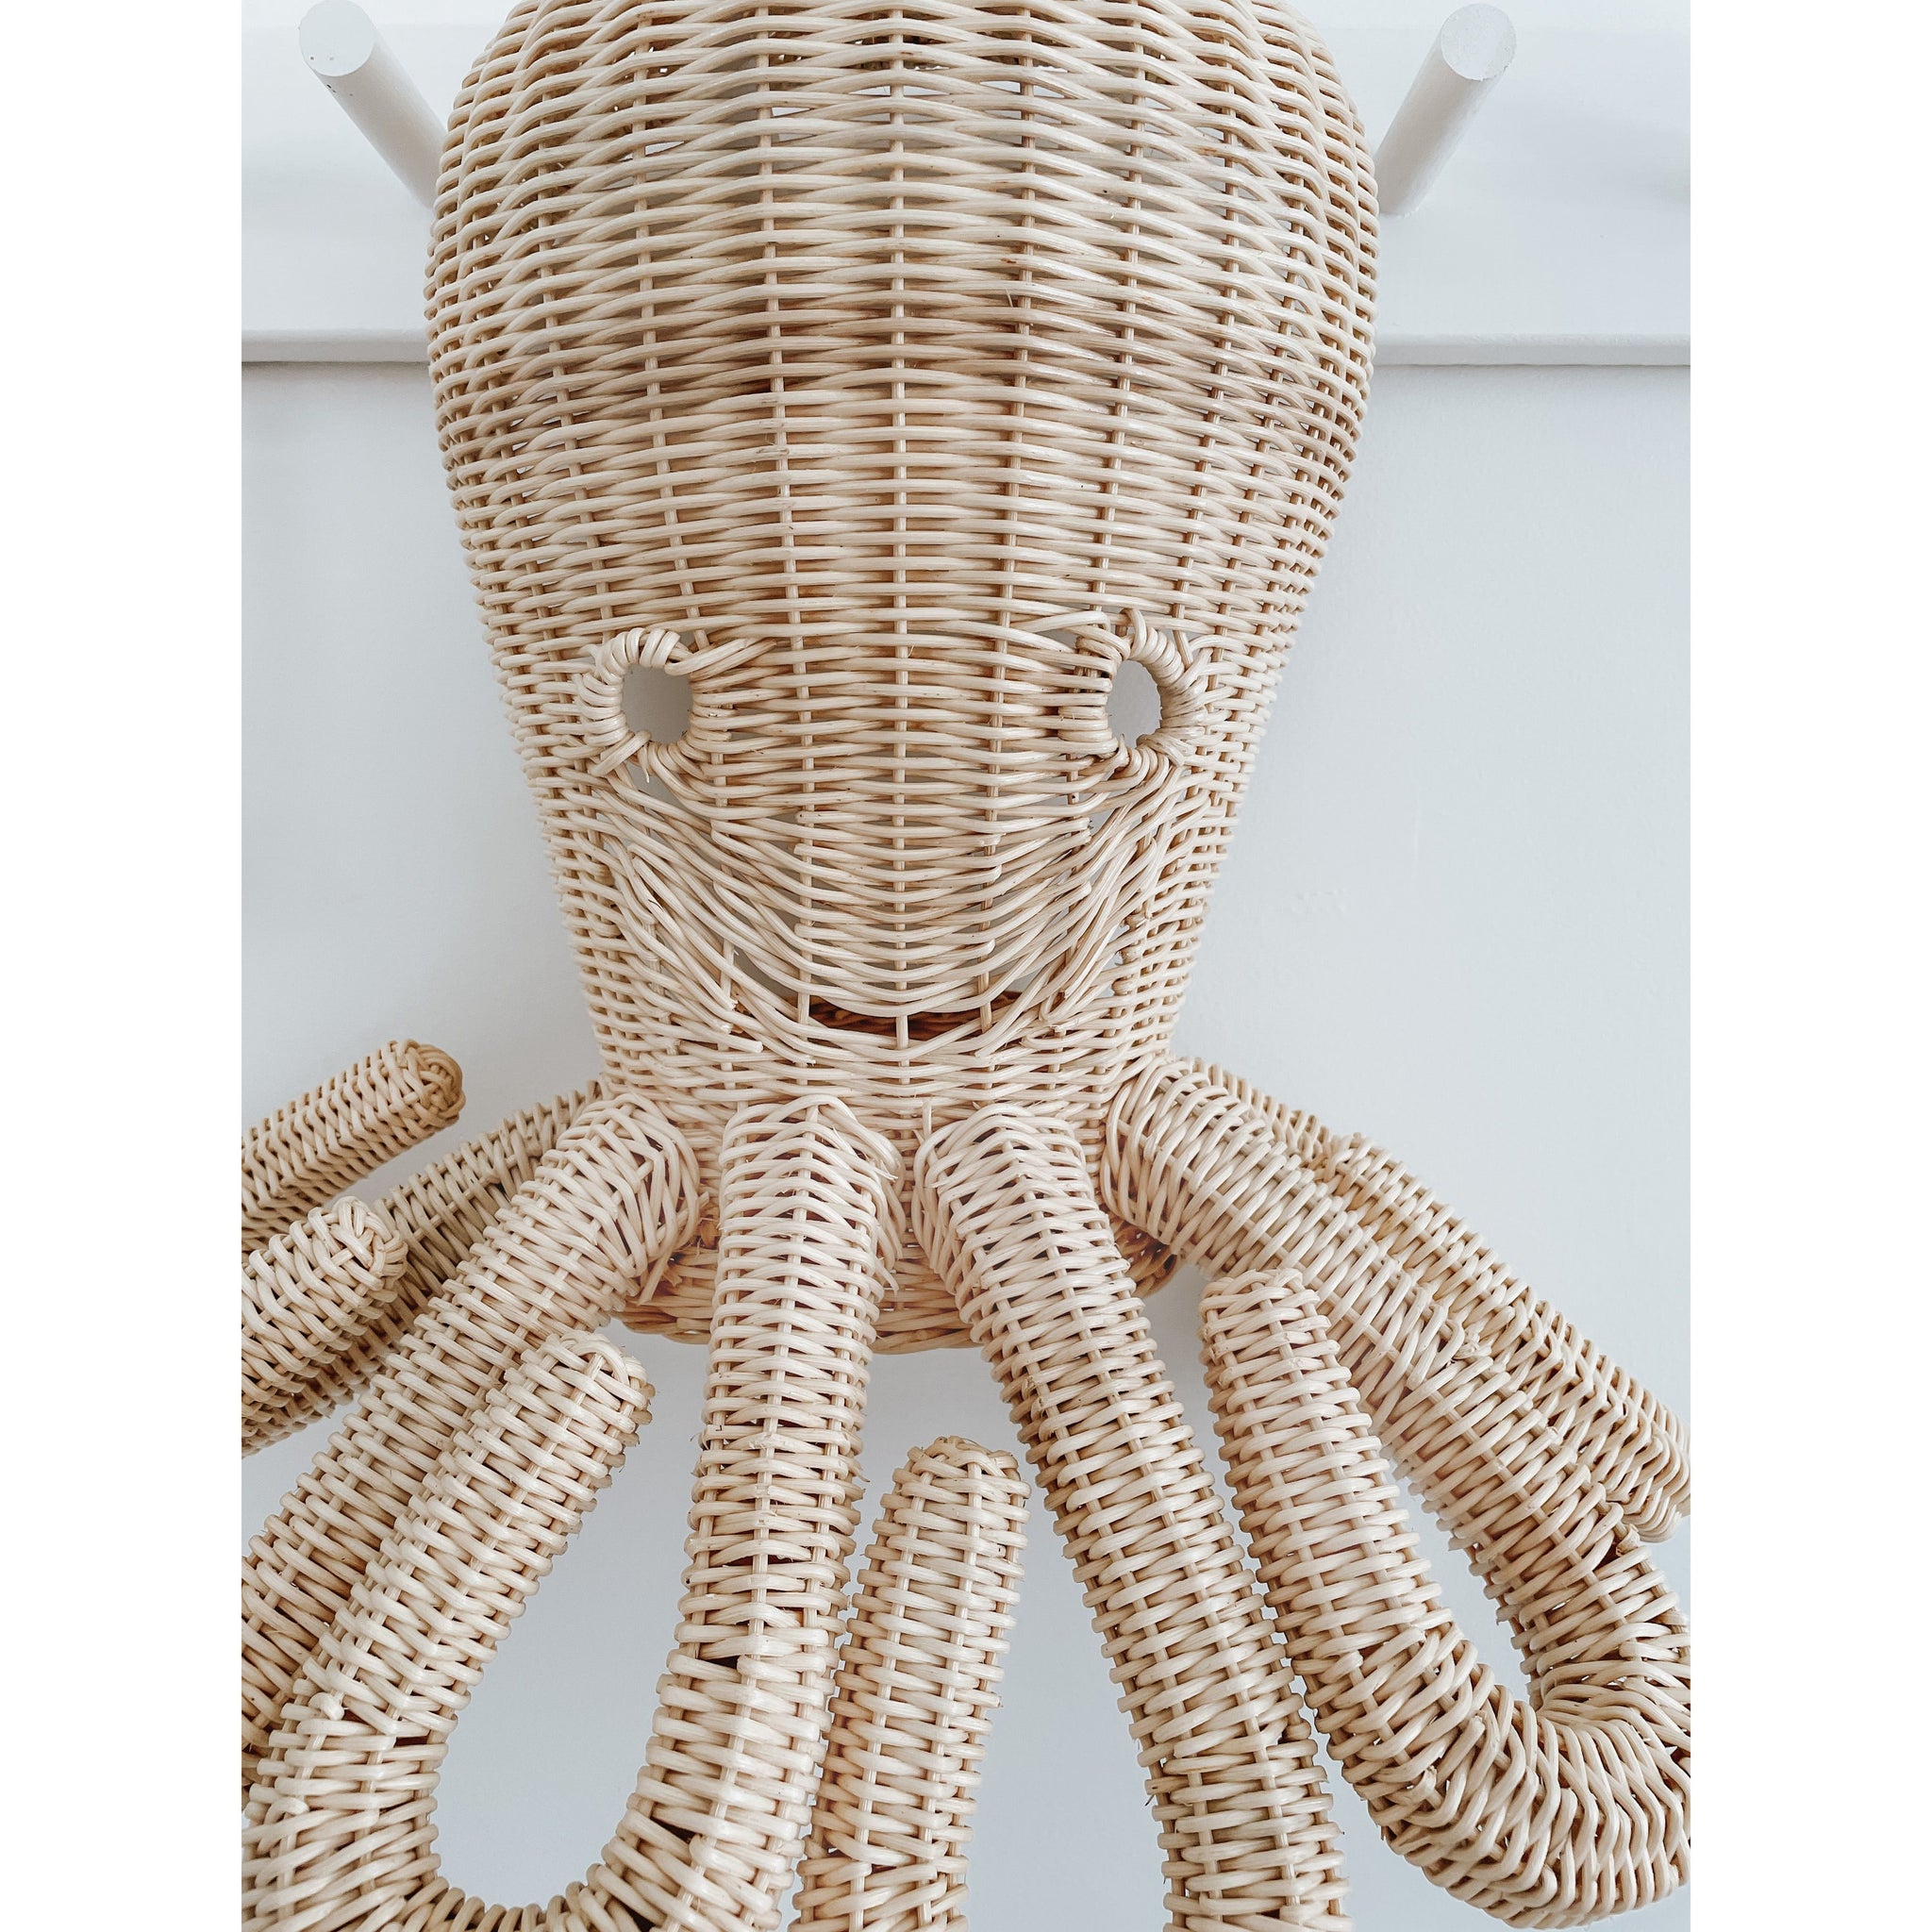 inkah rattan octopus wall hanging